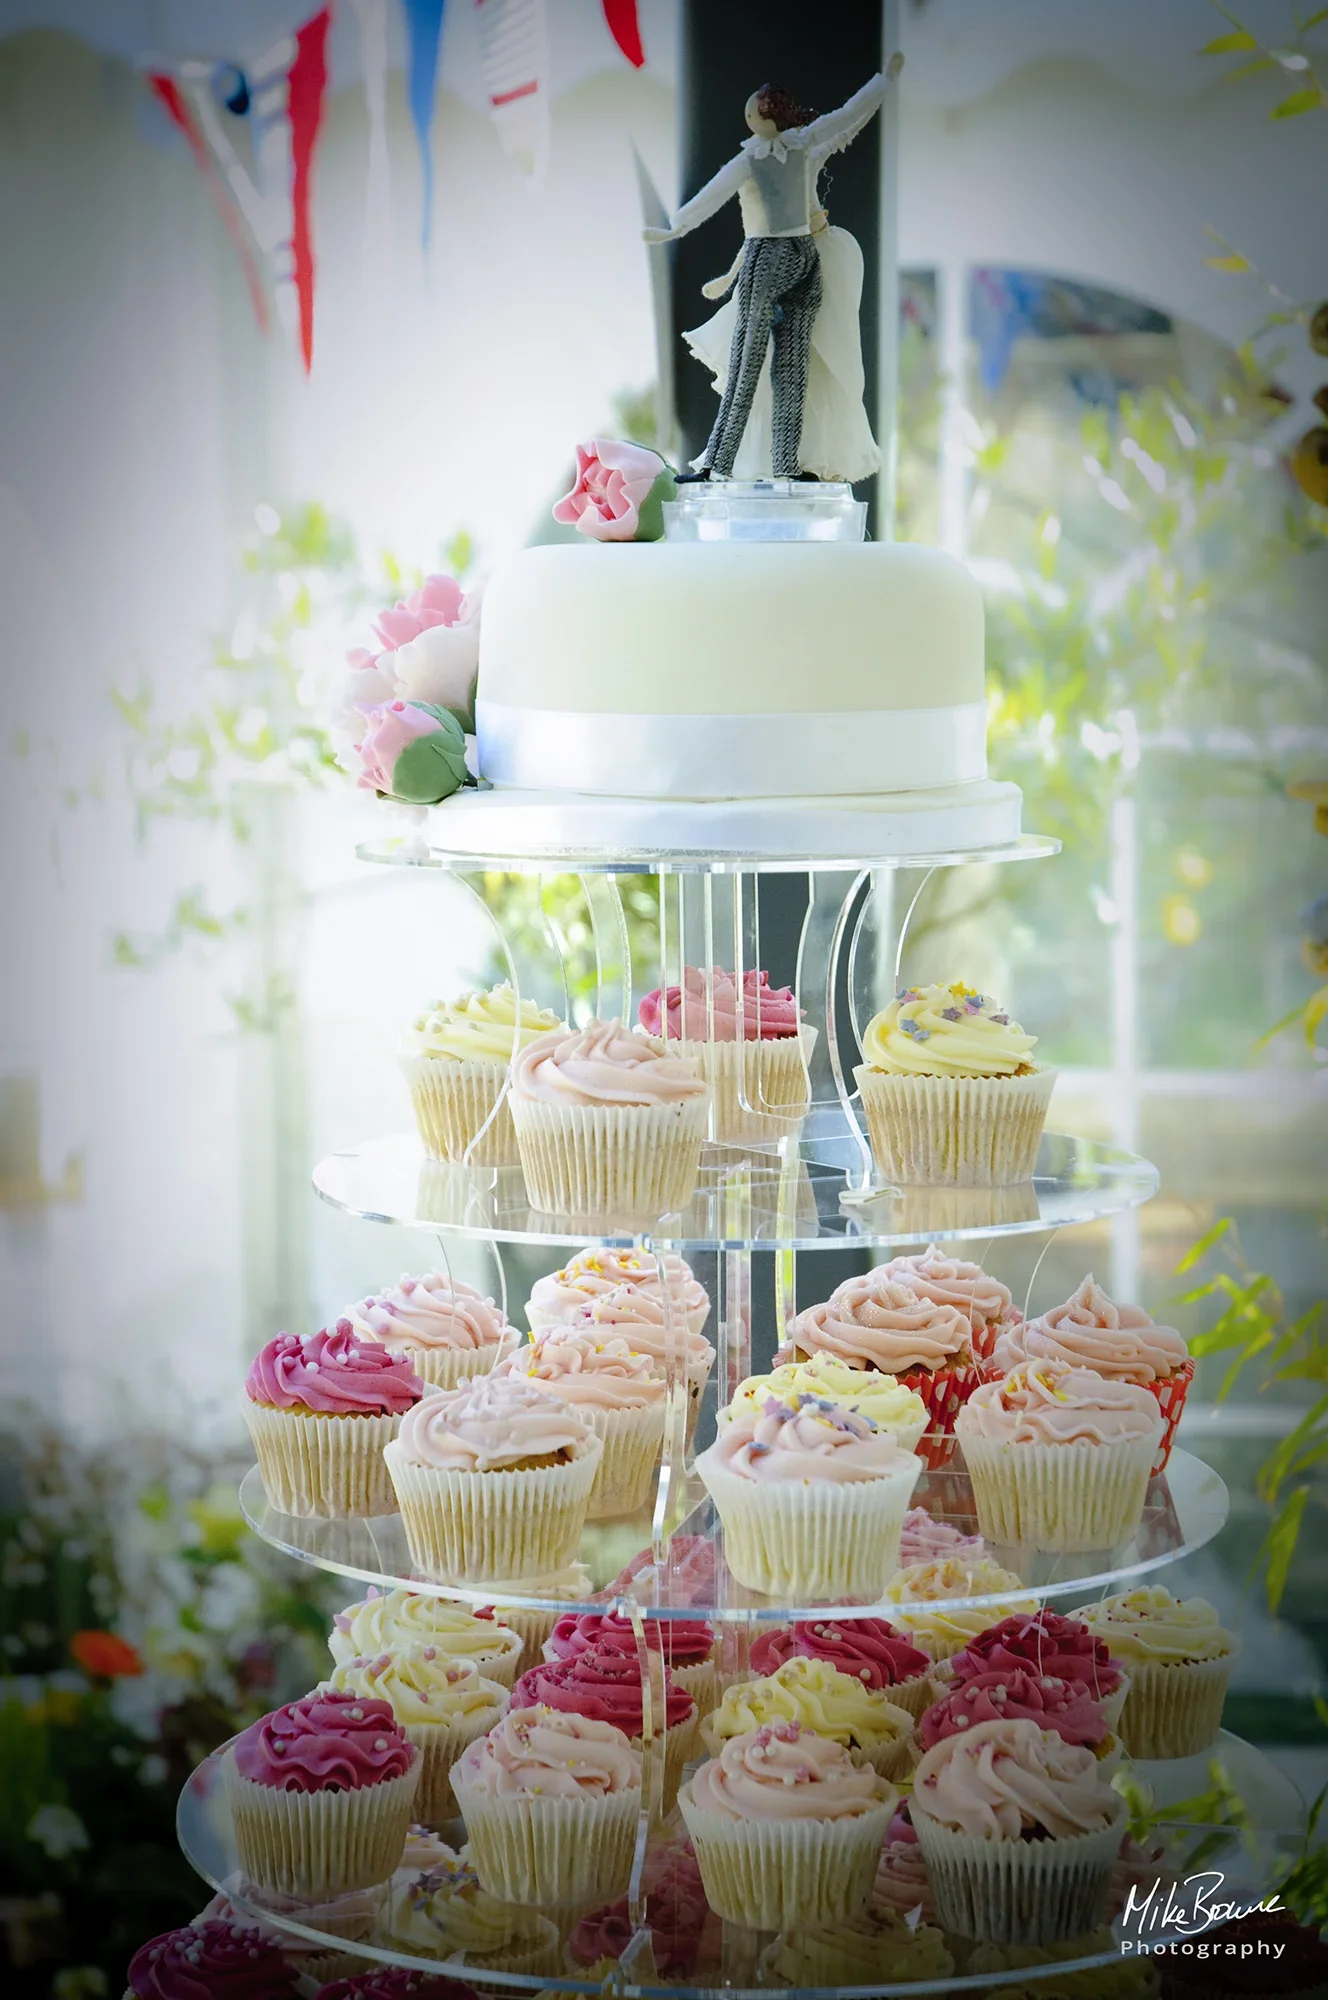 wedding cake display with miniature bride and groom dancing on top